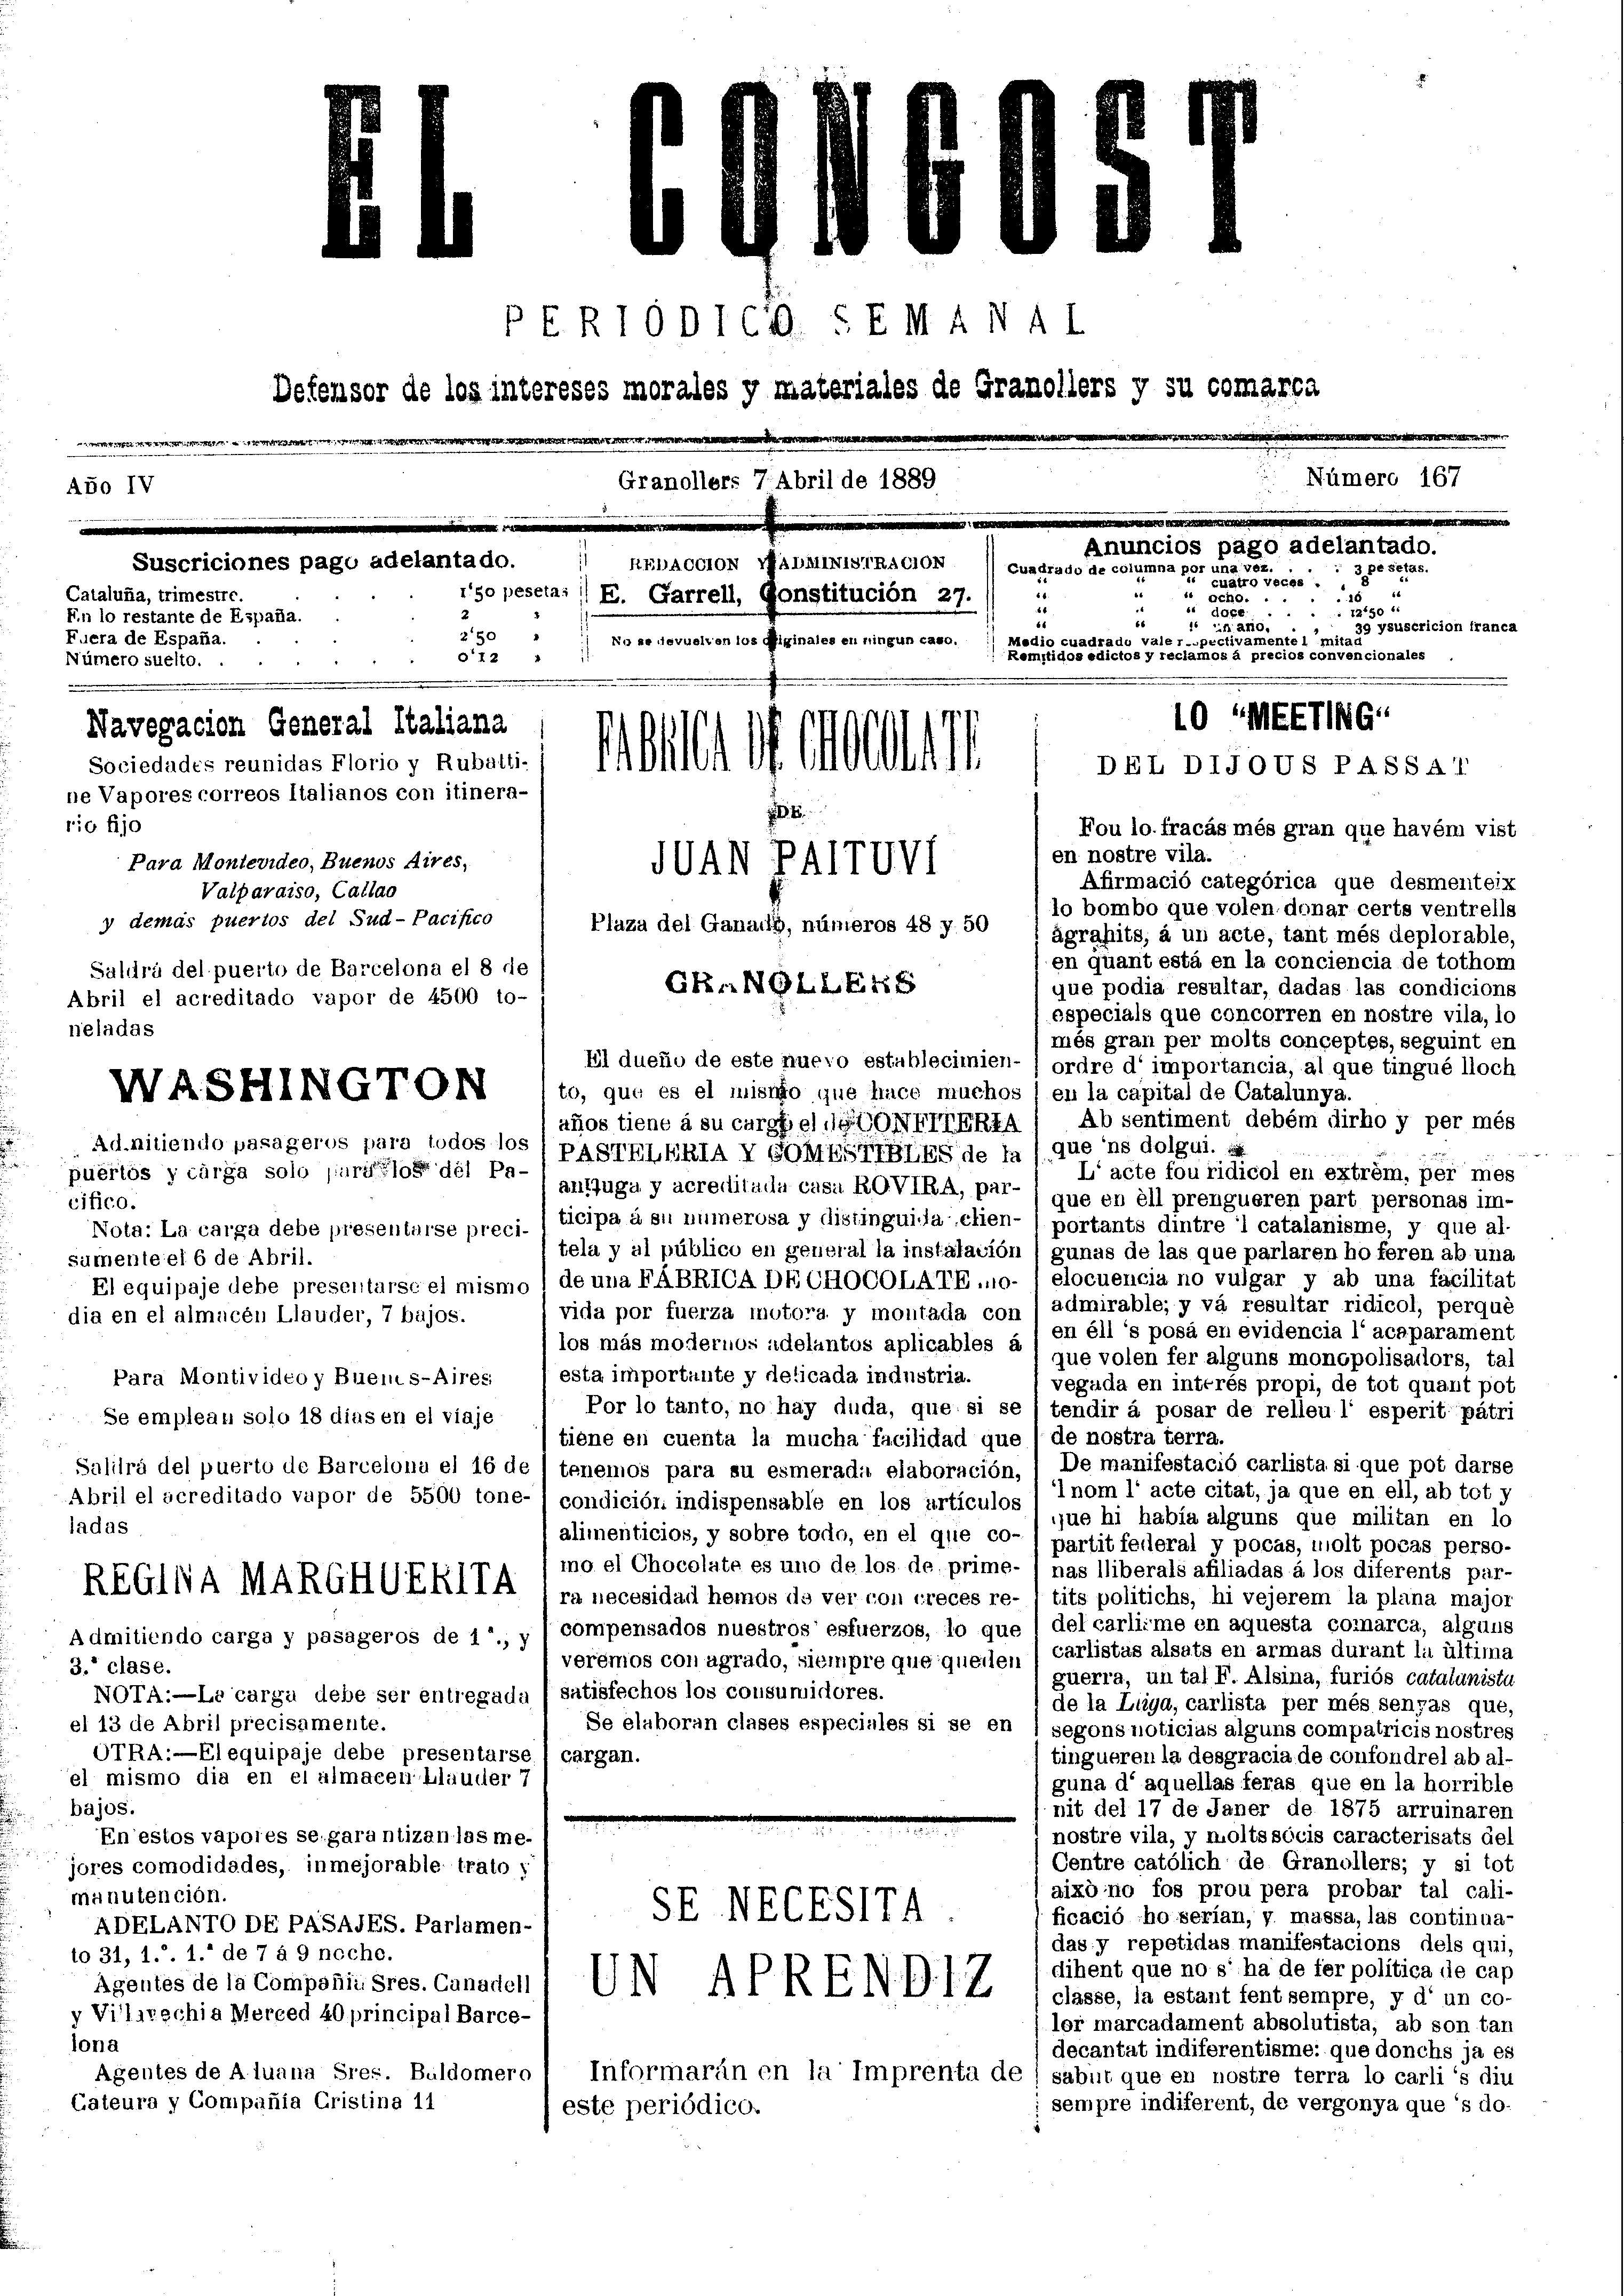 El Congost, 7/4/1889 [Exemplar]